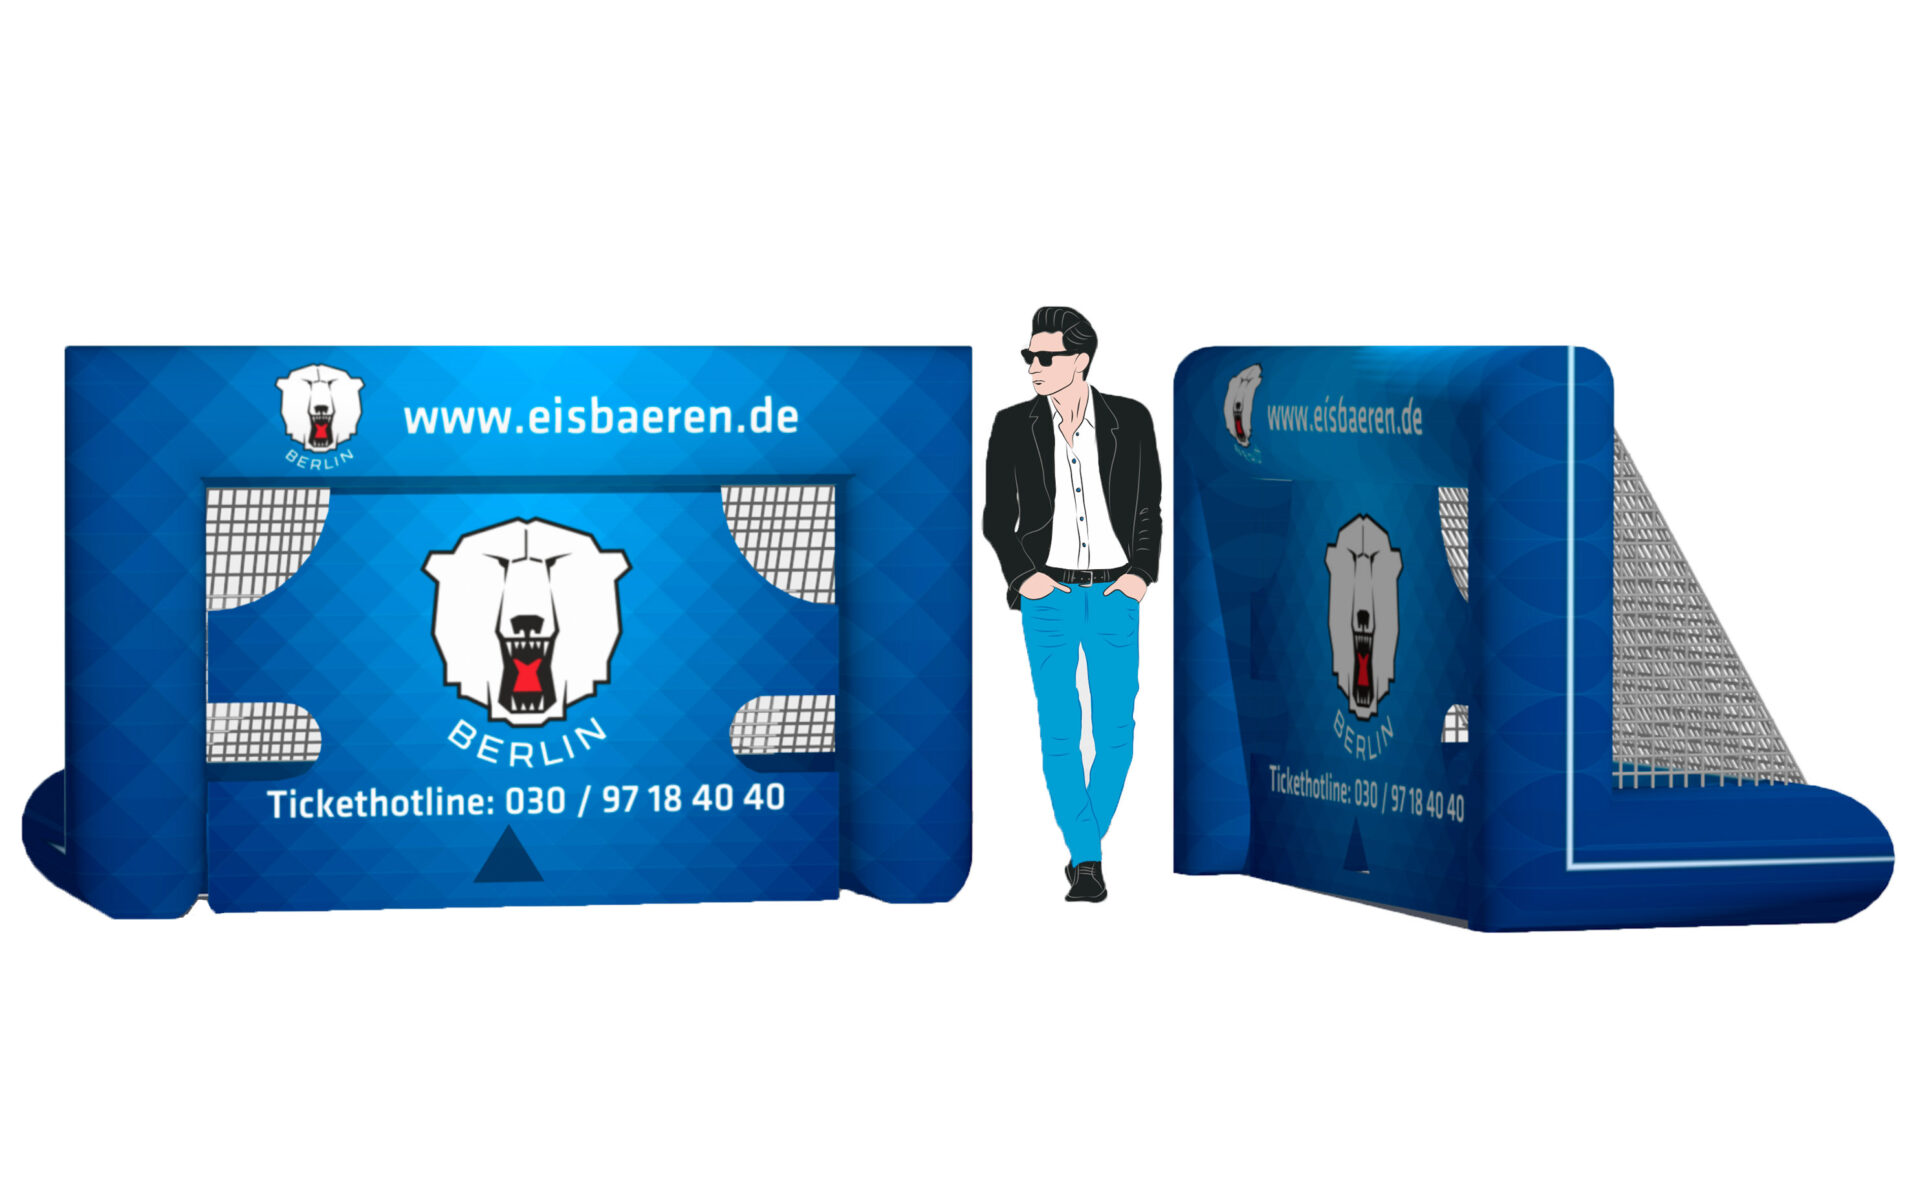 Eisbären-Berlin-inflatable-spider-tent-visual